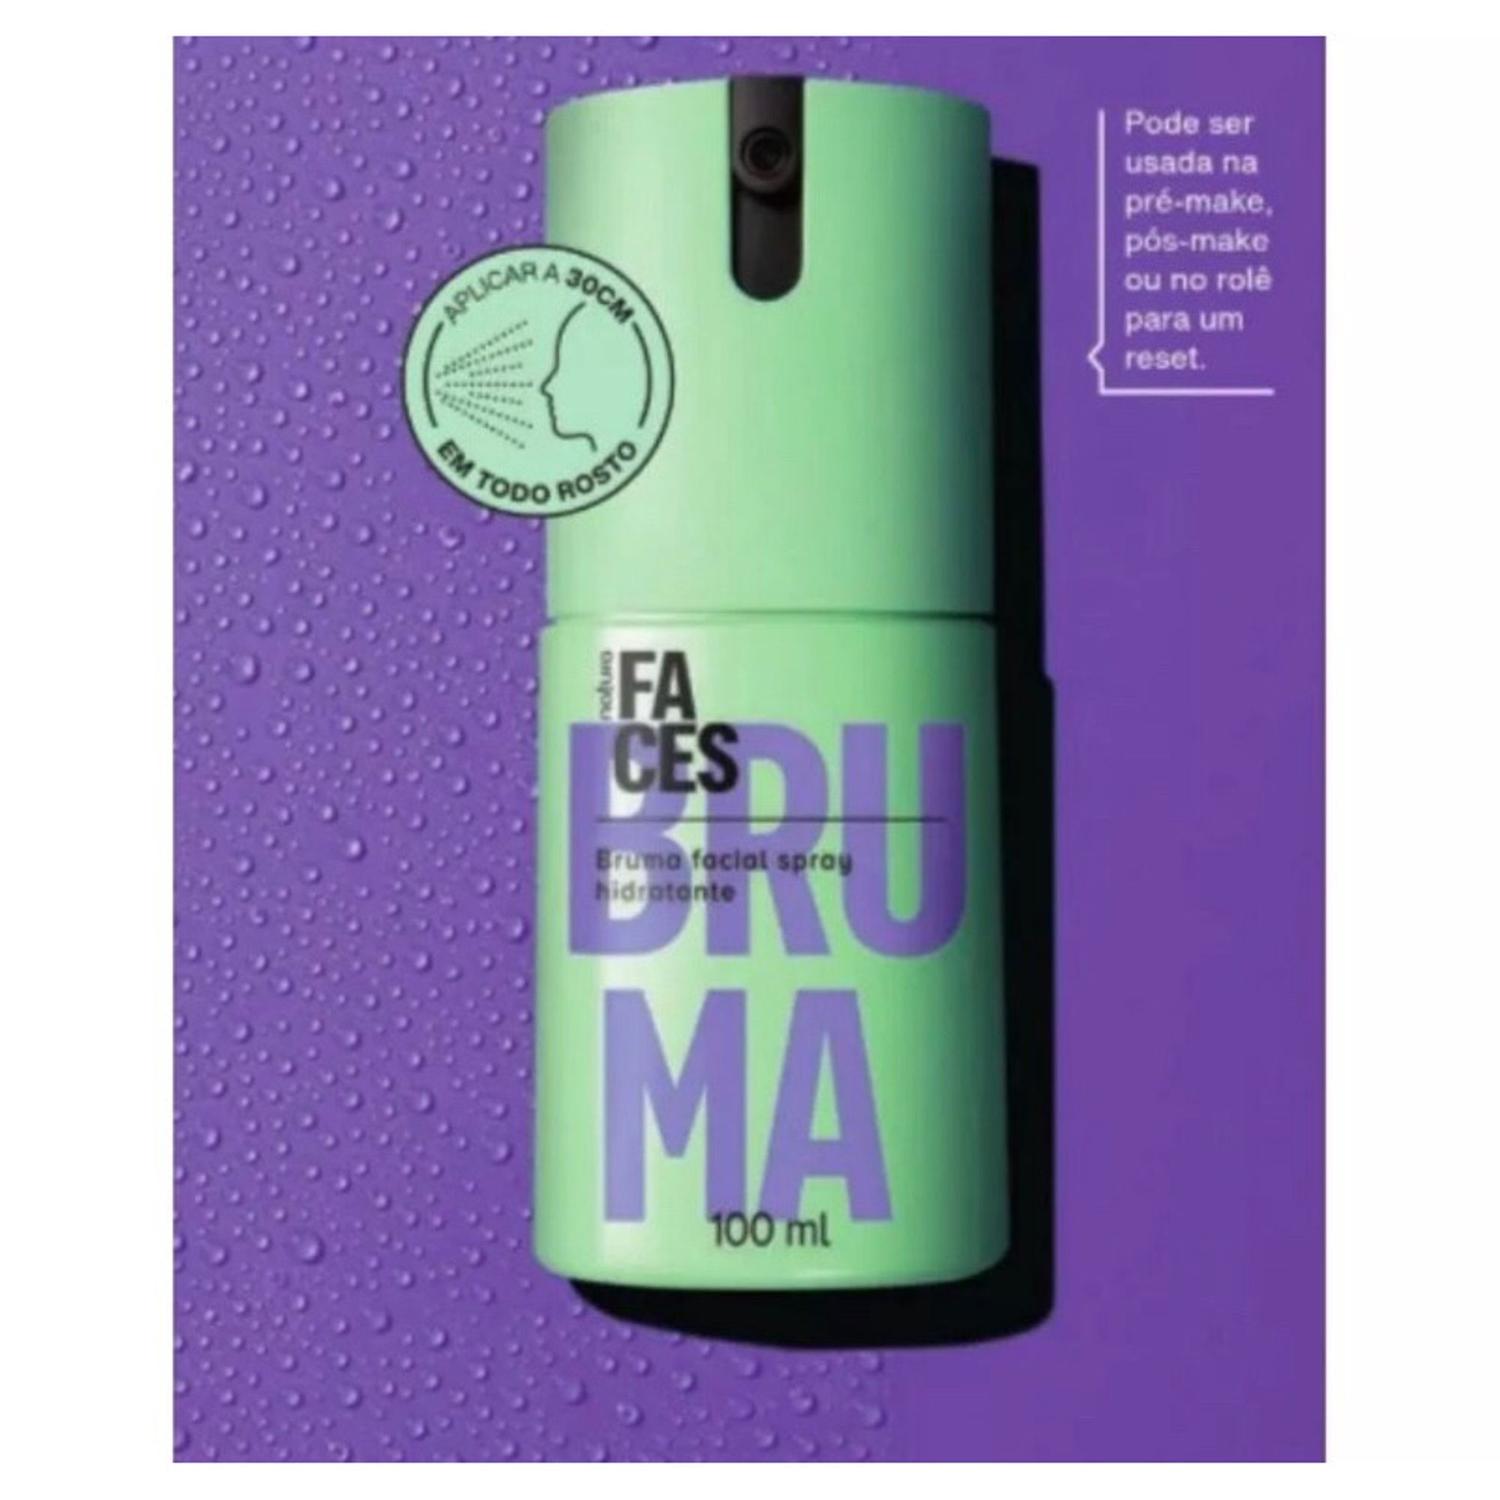 Bruma Facial Hidratante Spray Natura Faces 100ml, Magalu Empresas